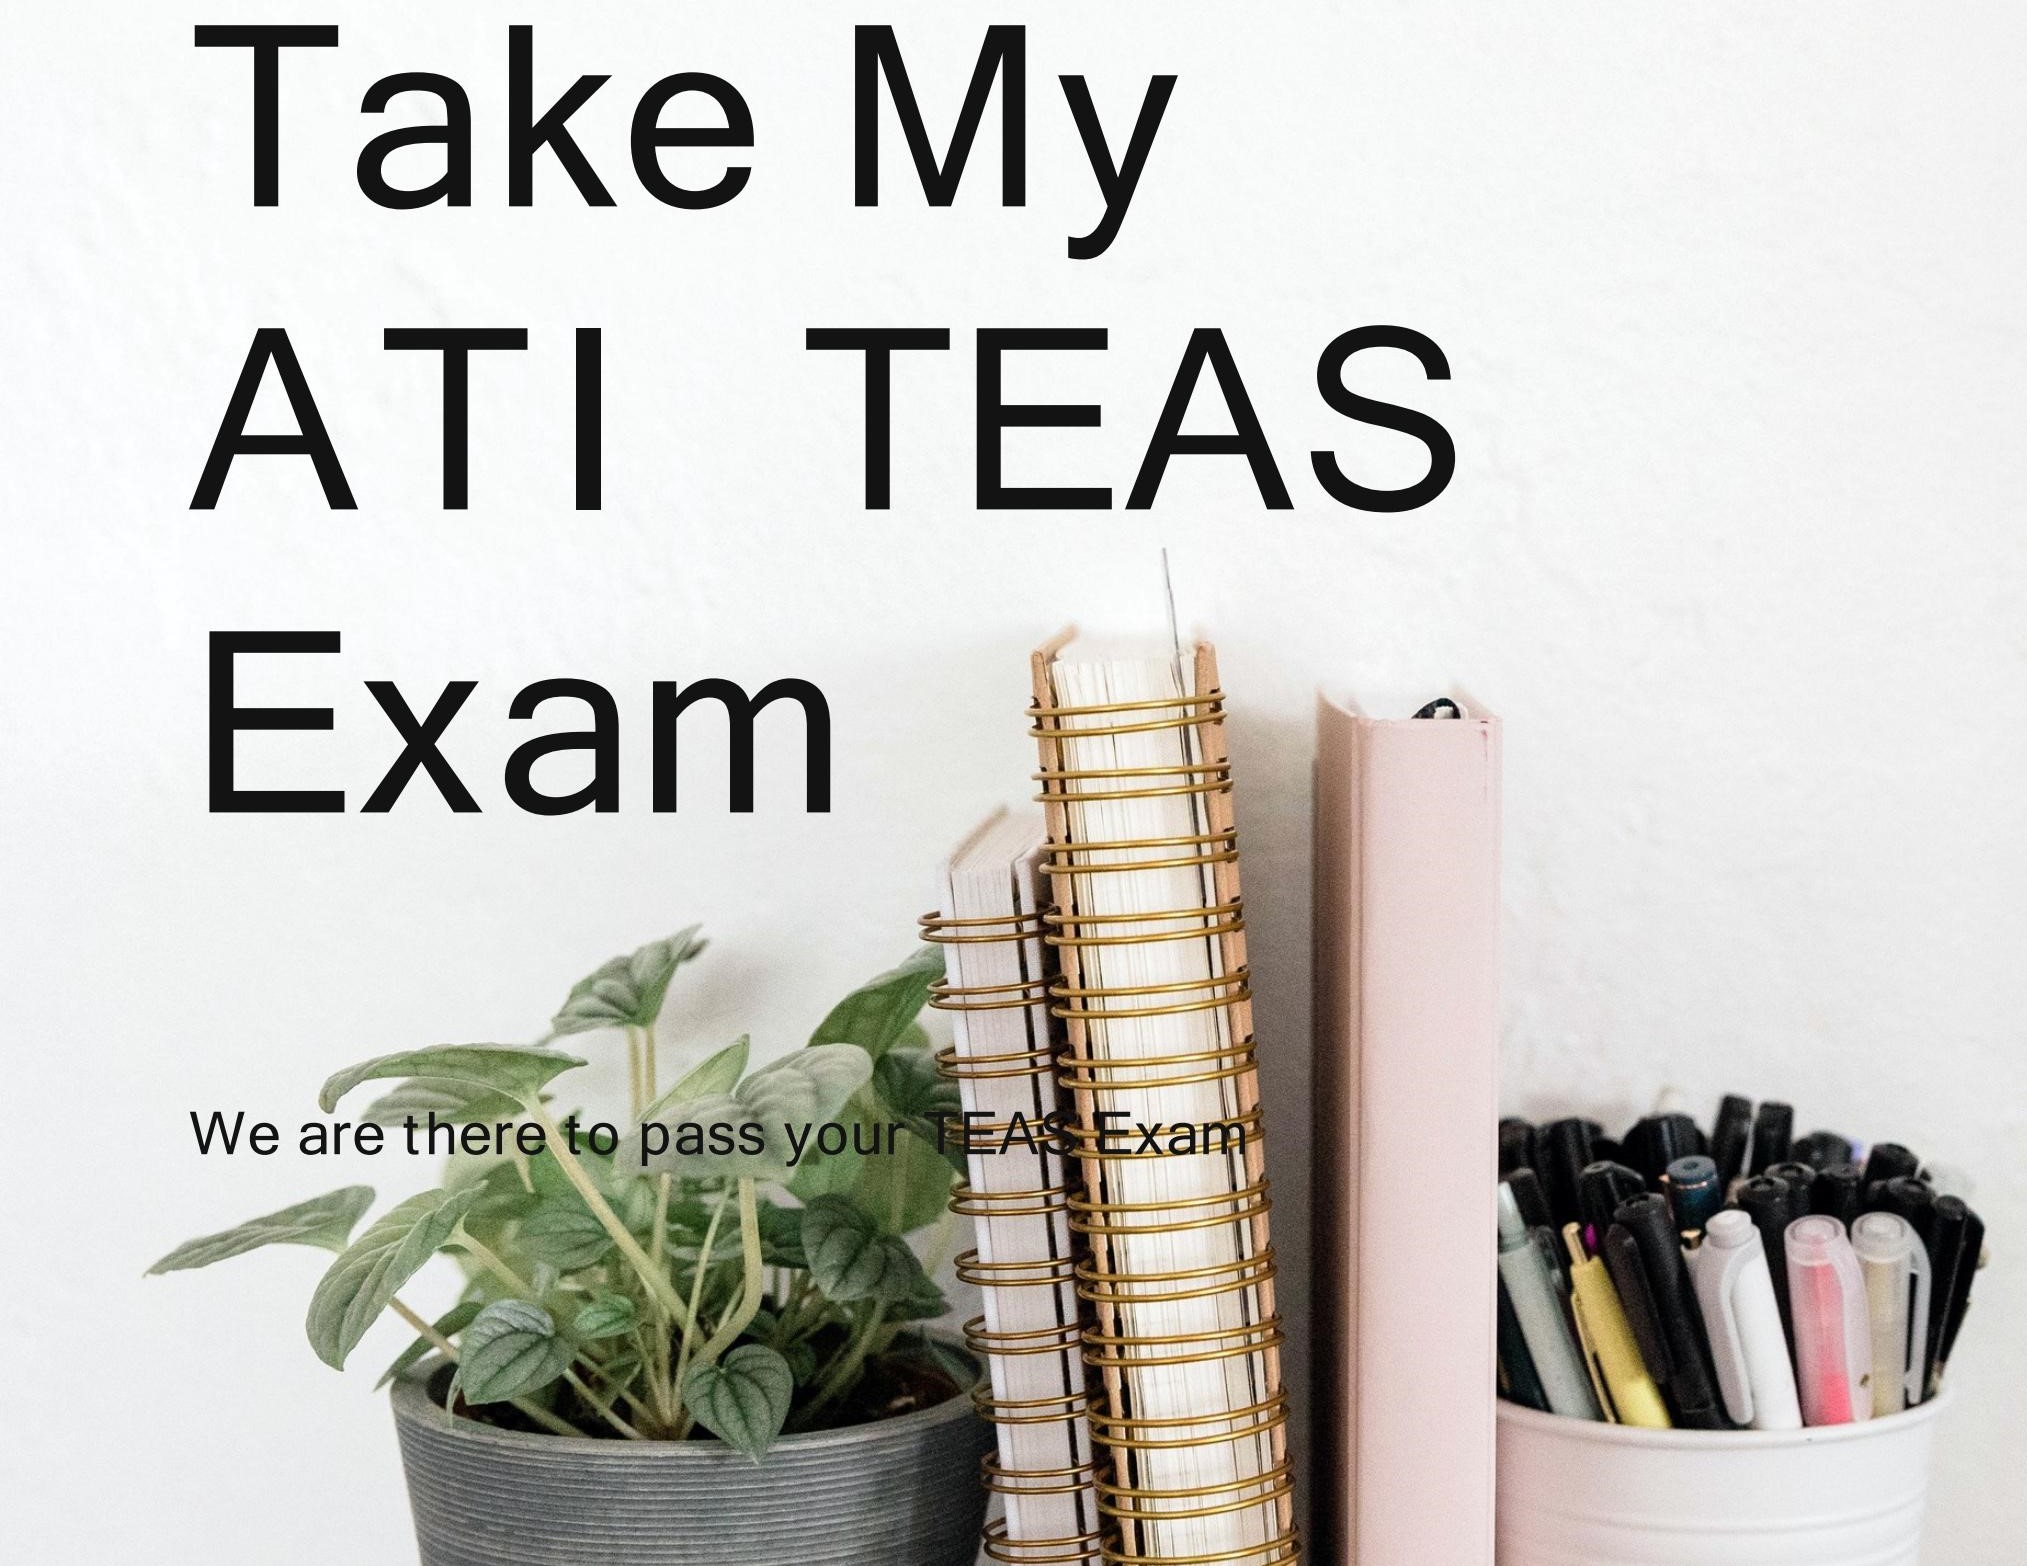 Take my teas exam